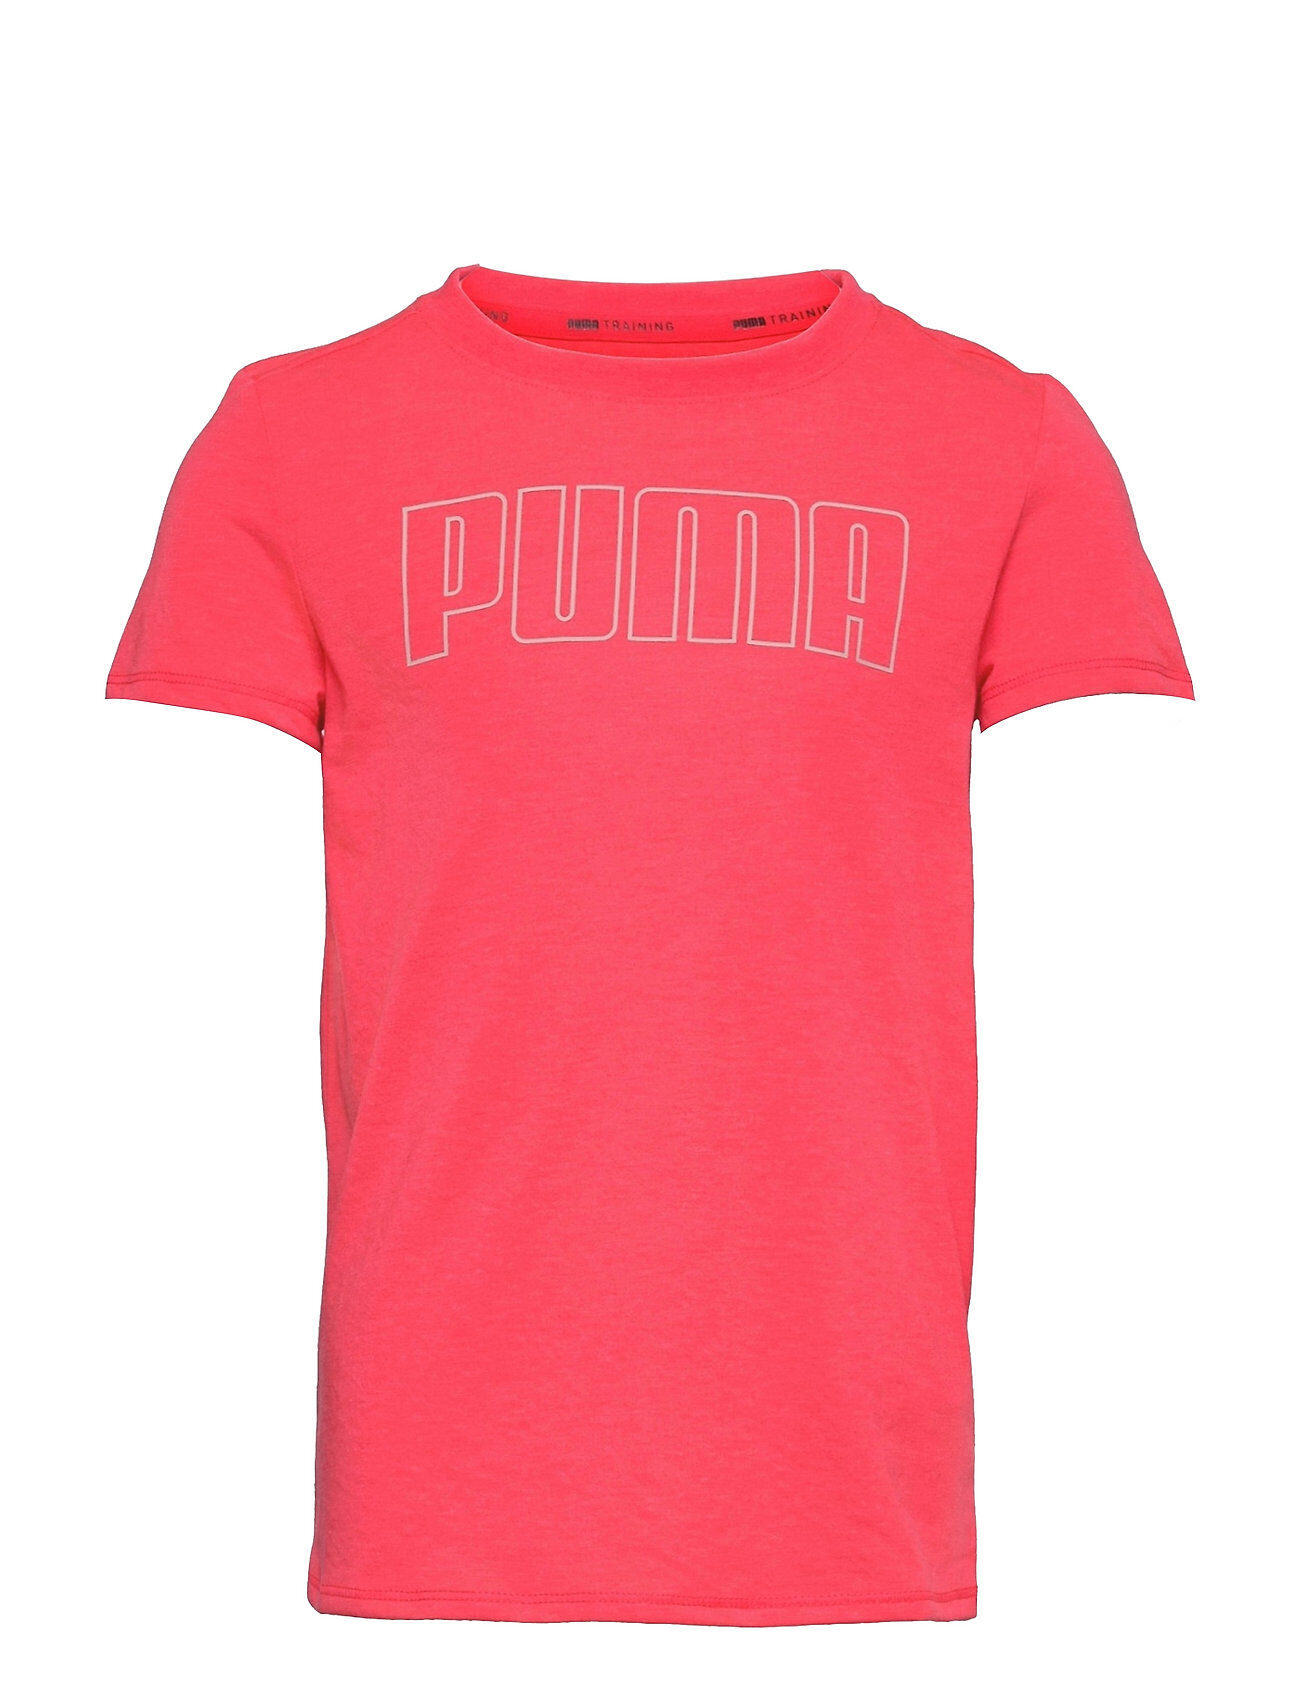 PUMA Runtrain Tee G T-shirts Short-sleeved Rosa PUMA